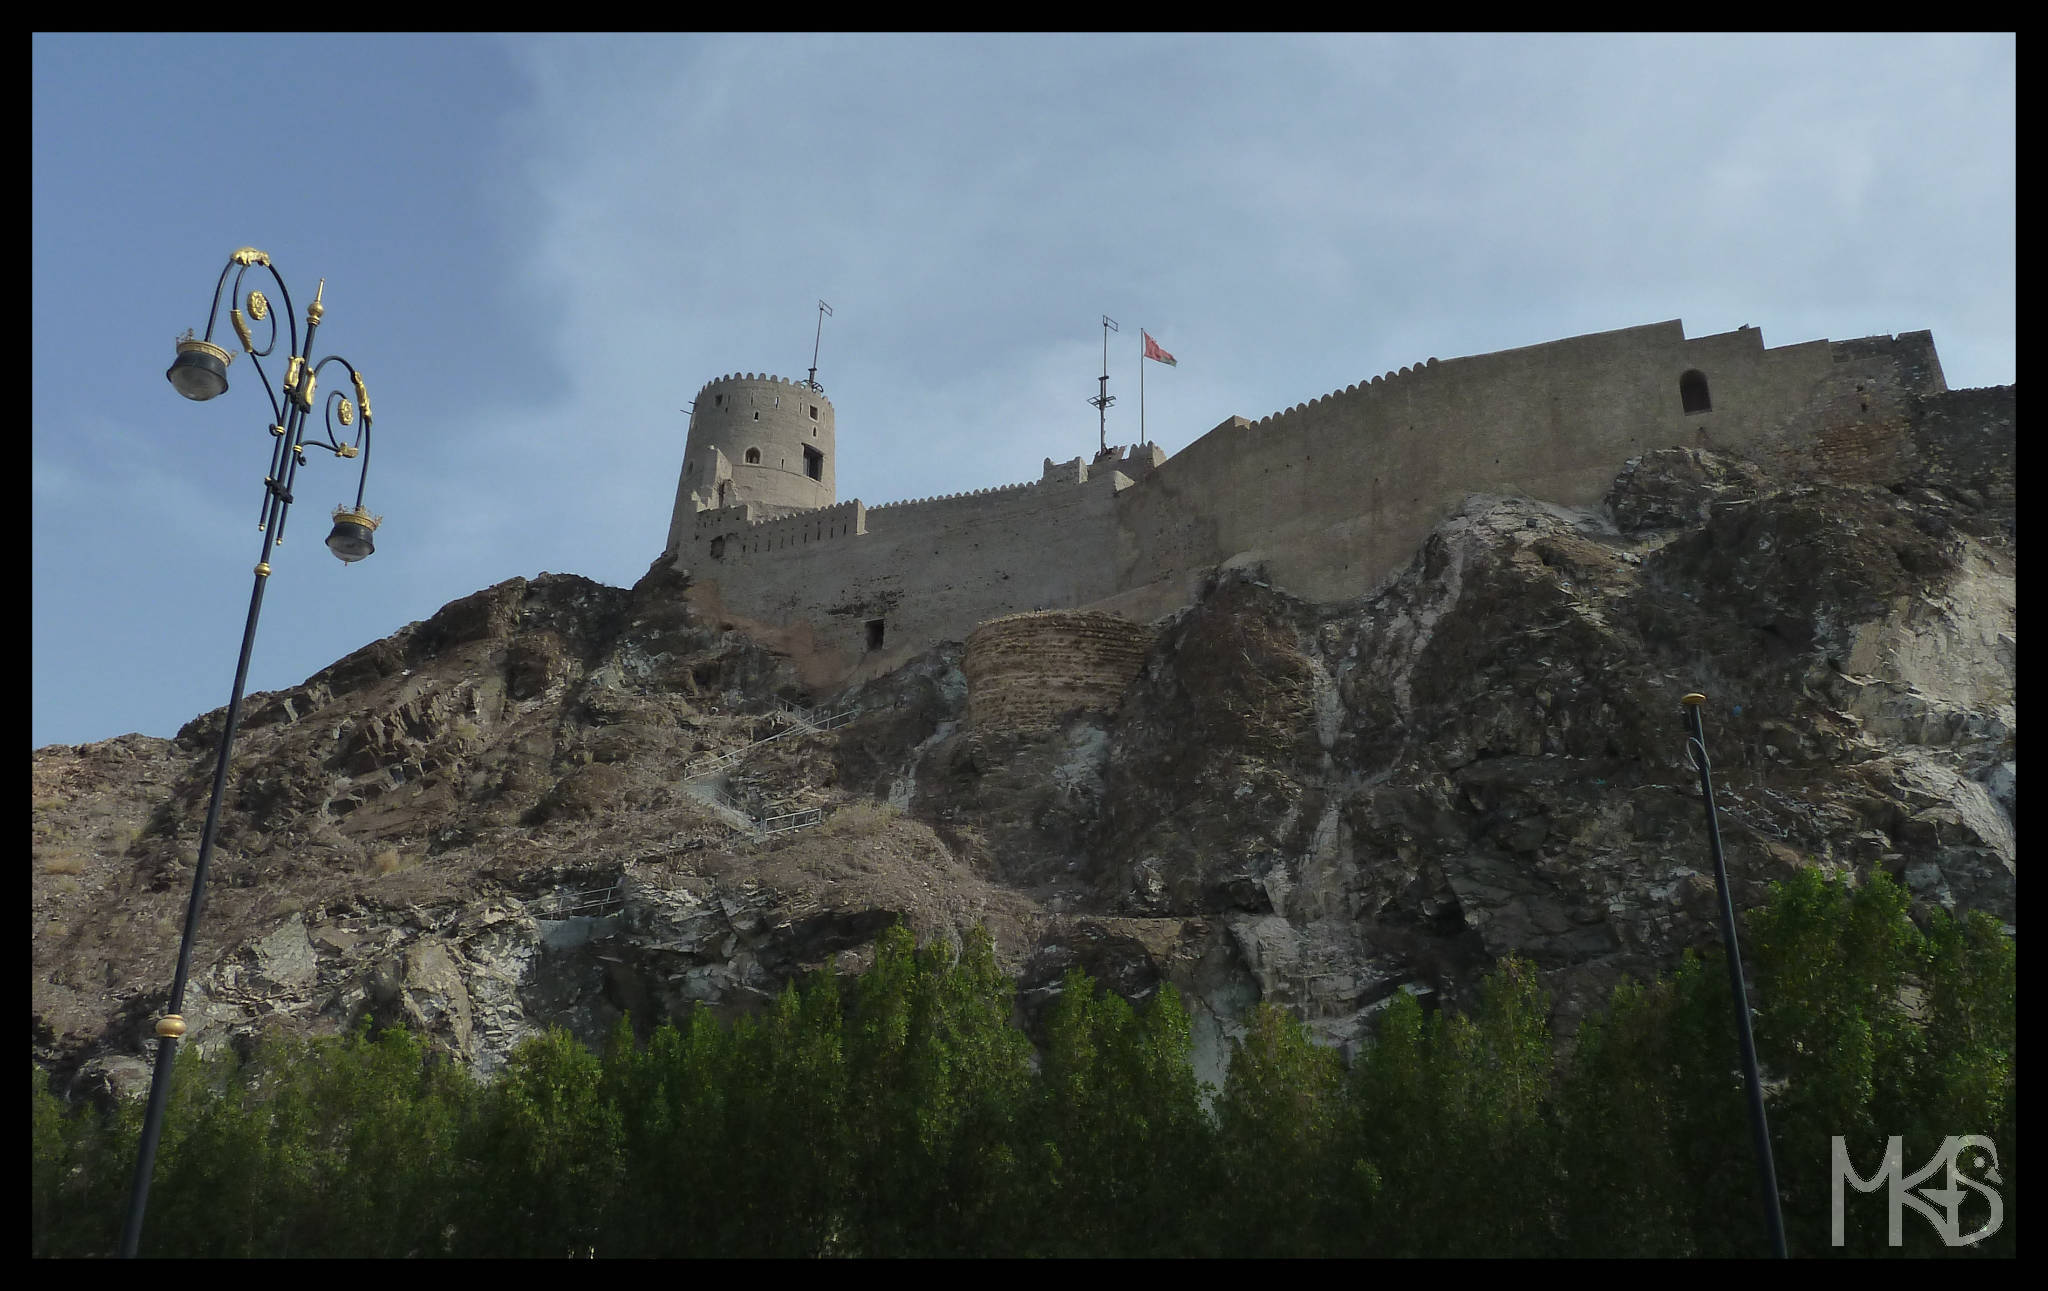 Portuguese watchtower near Mutrah Souq, Muscat, Oman 